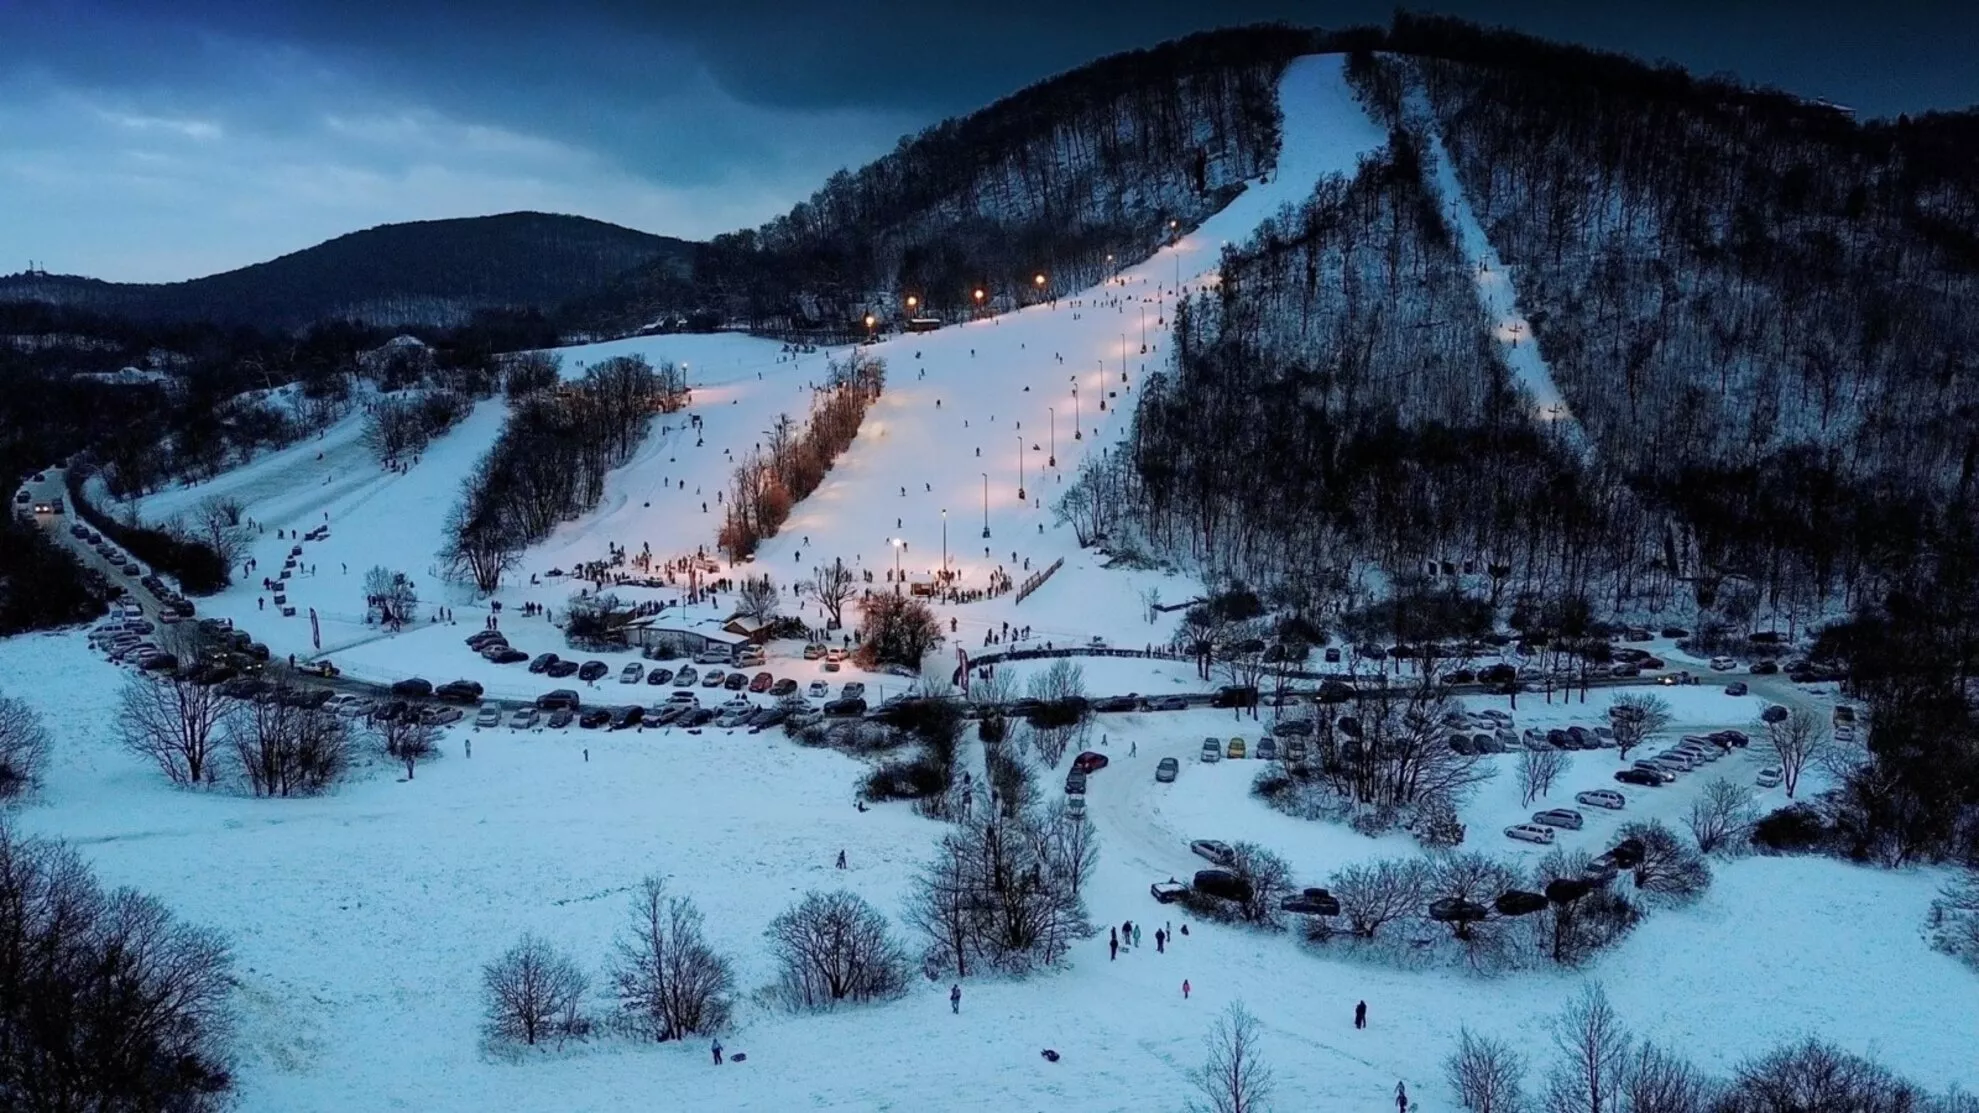 Dobogoko Ski Centre in Hungary, Europe | Snowboarding,Skiing - Rated 3.7